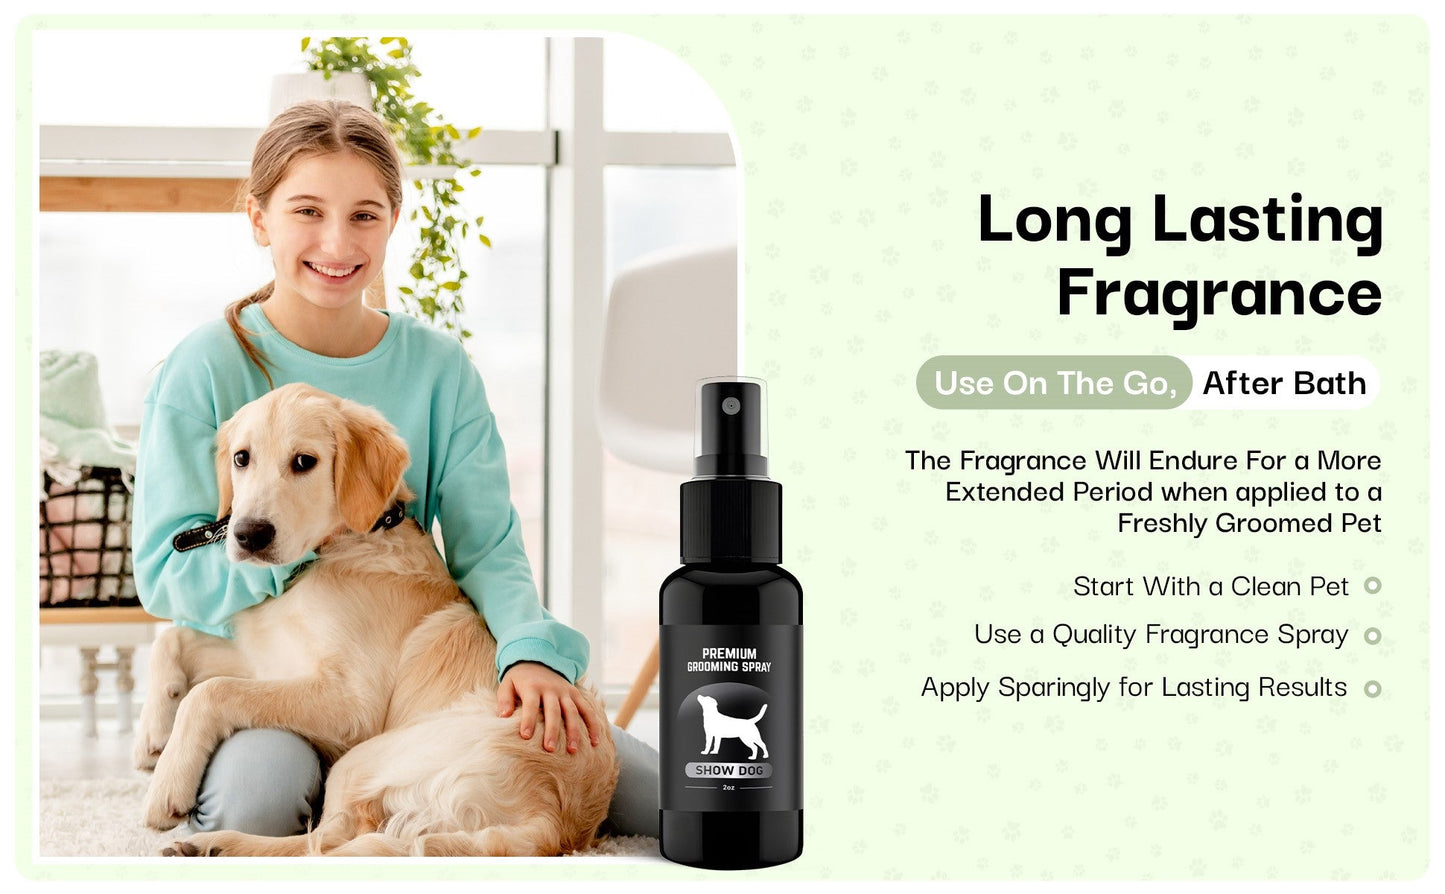 Show Dog Premium Grooming Spray (2oz - 3 Pack)